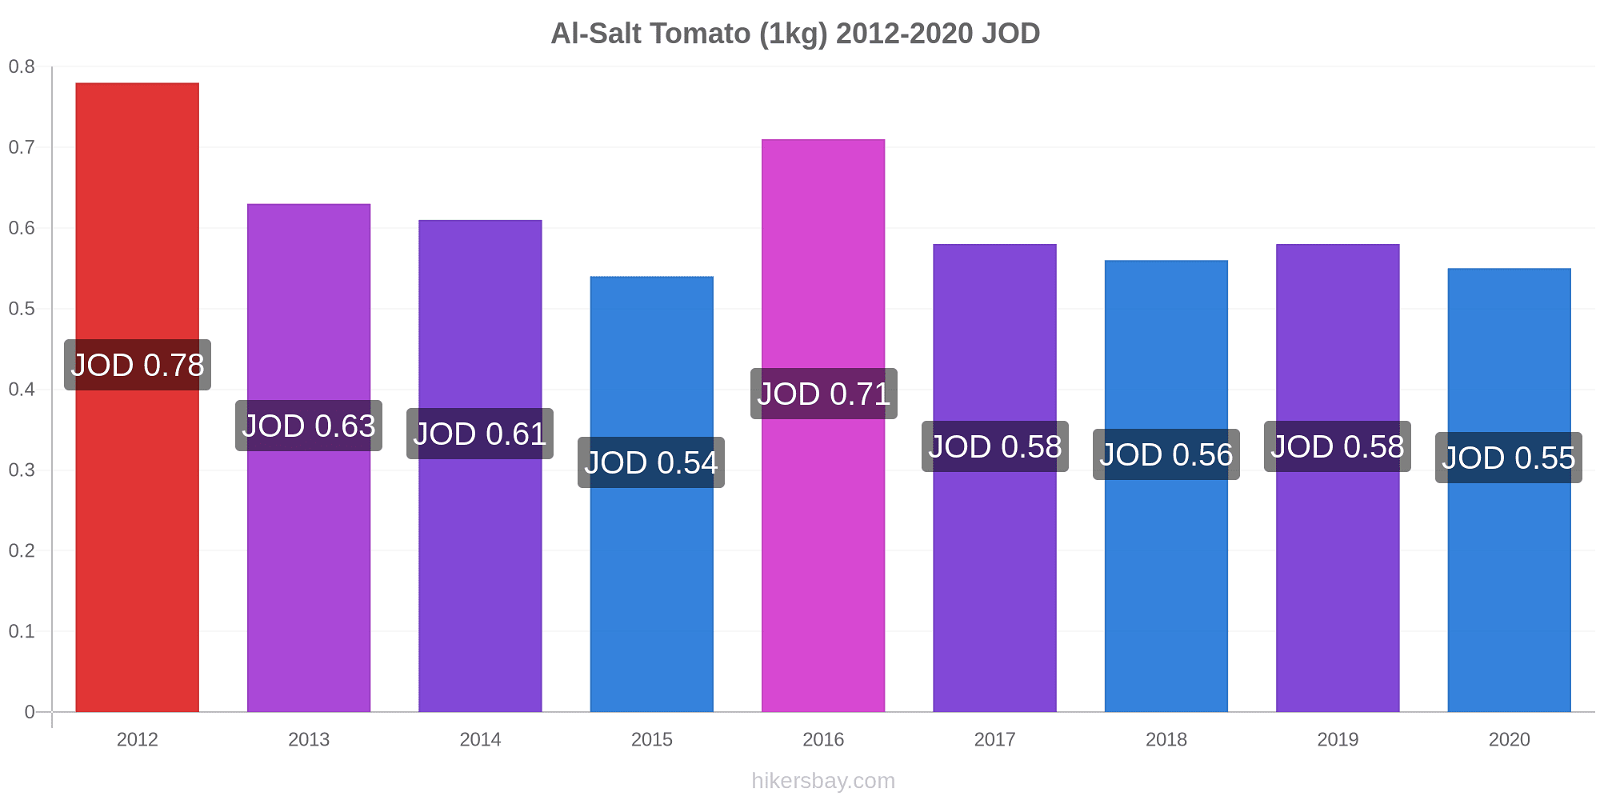 Al-Salt price changes Tomato (1kg) hikersbay.com